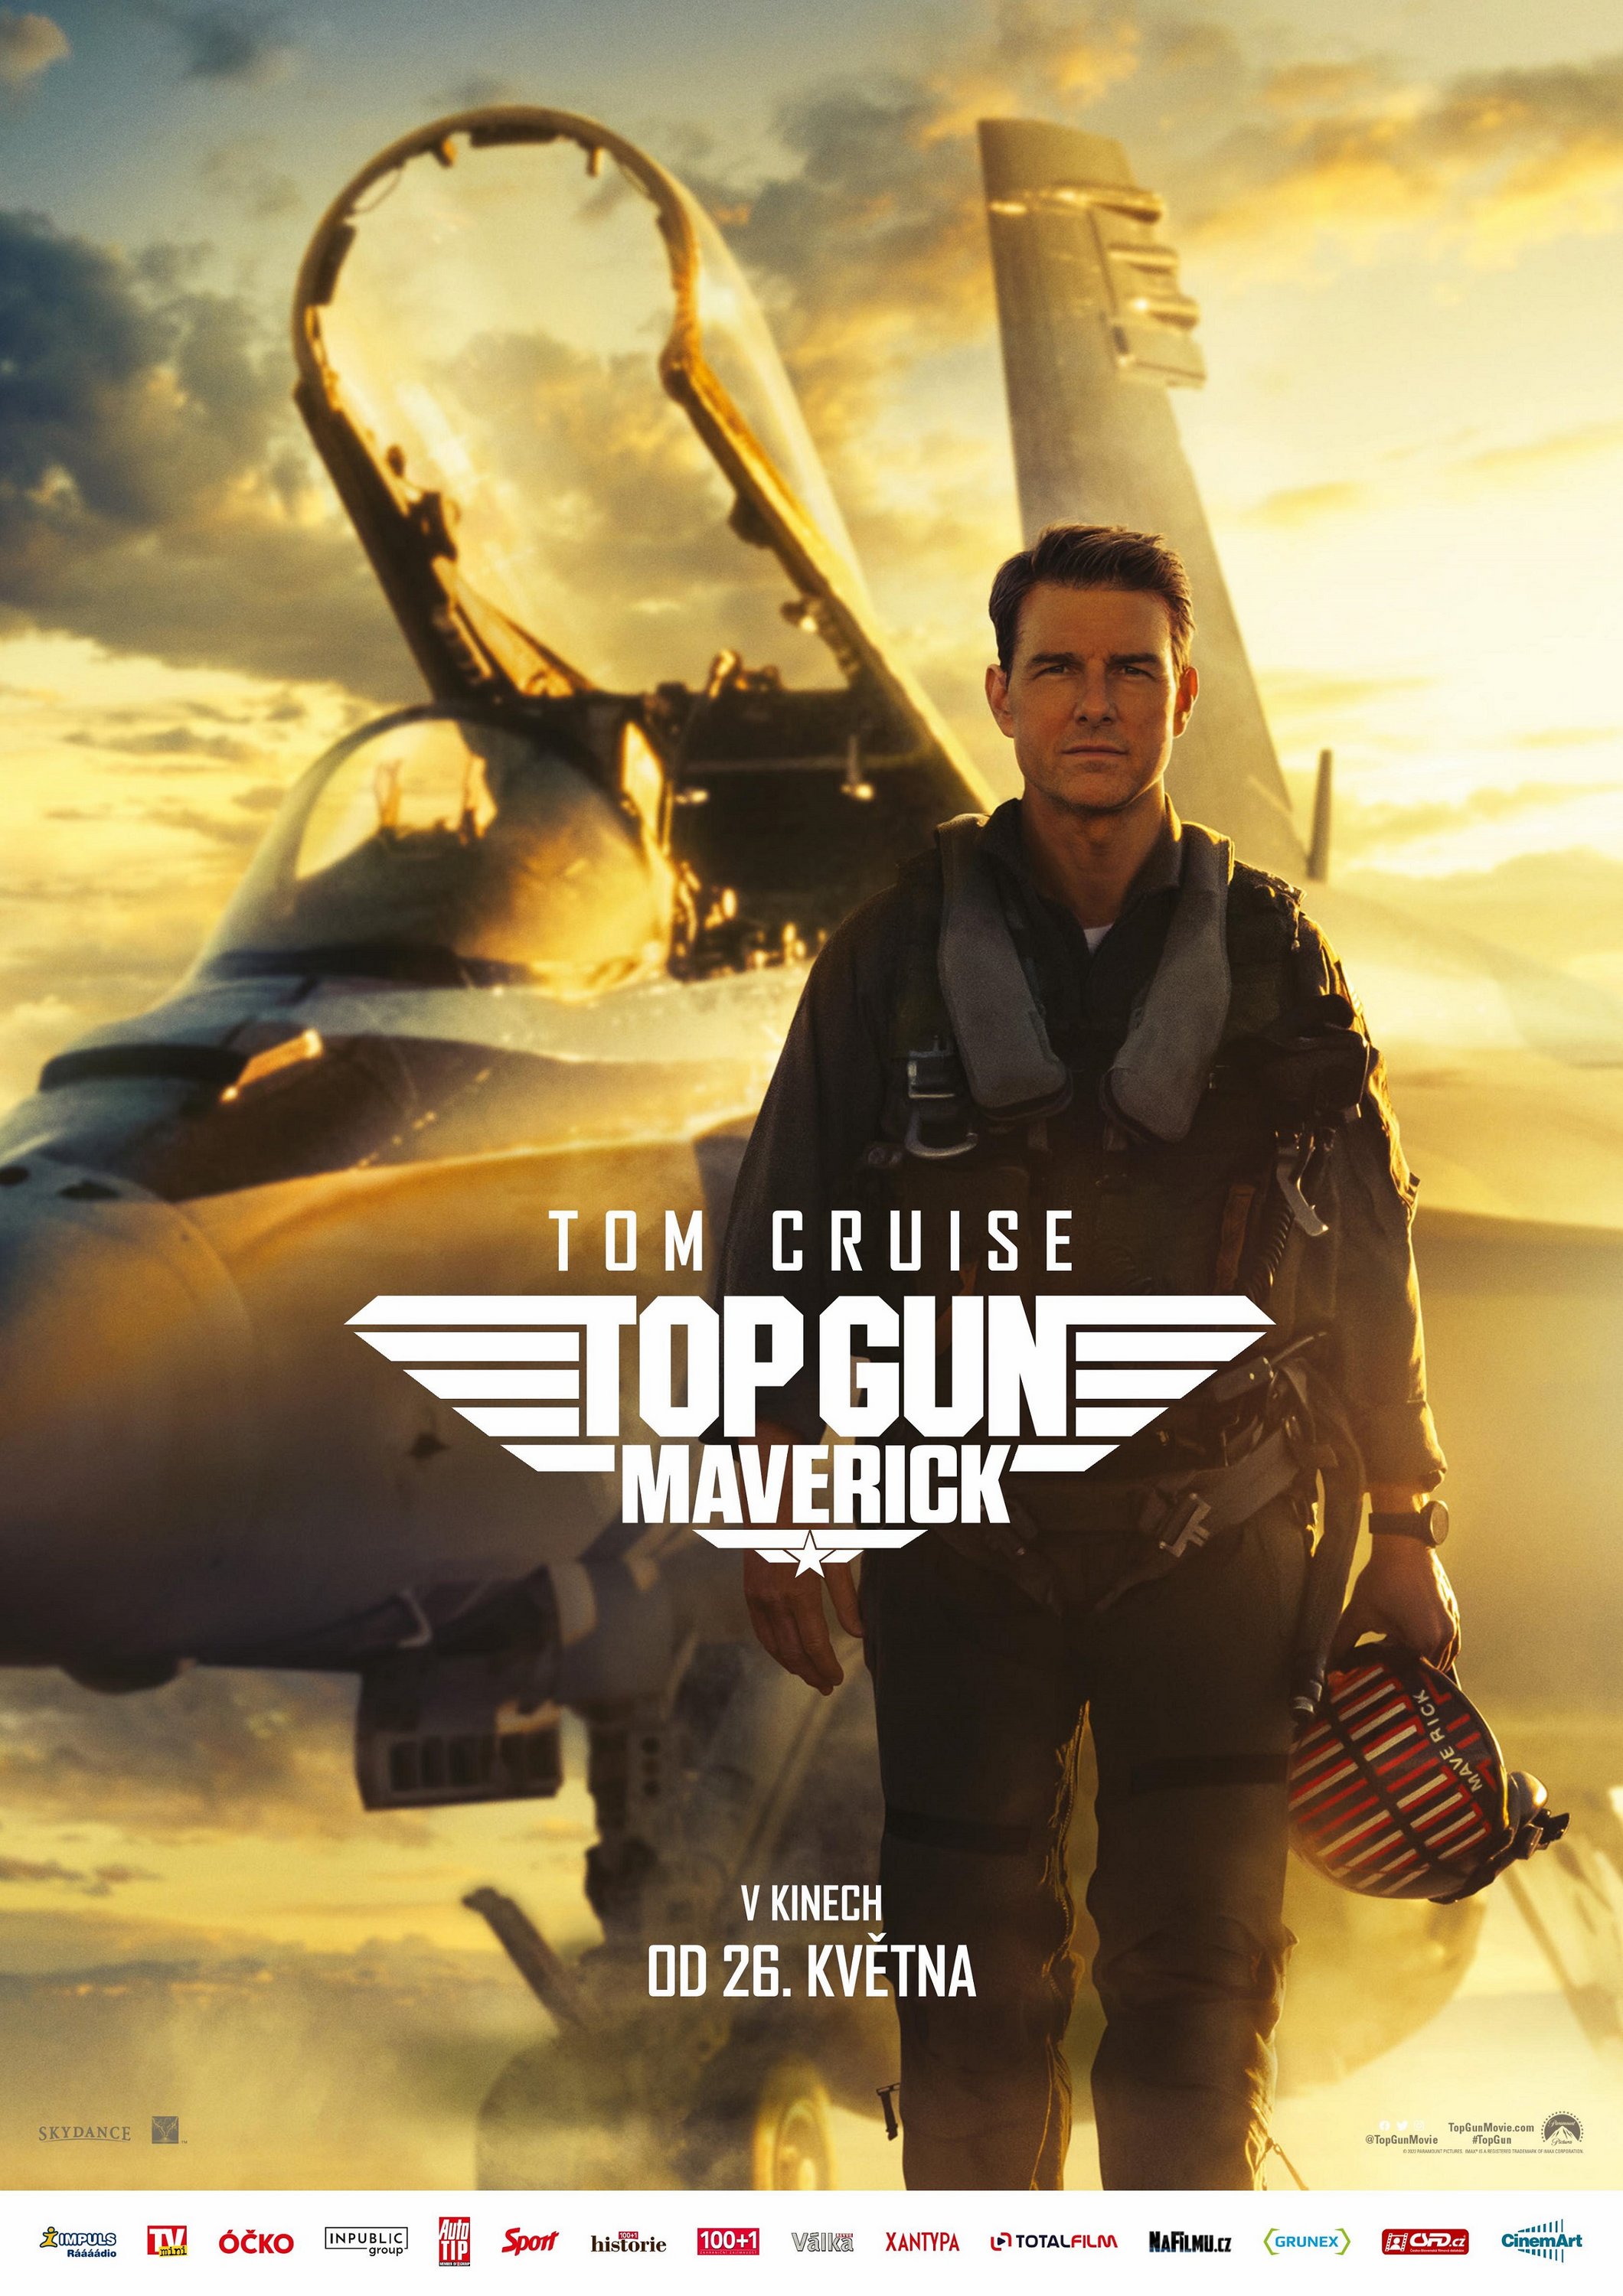 Top-Gun-Poster-007.jpg